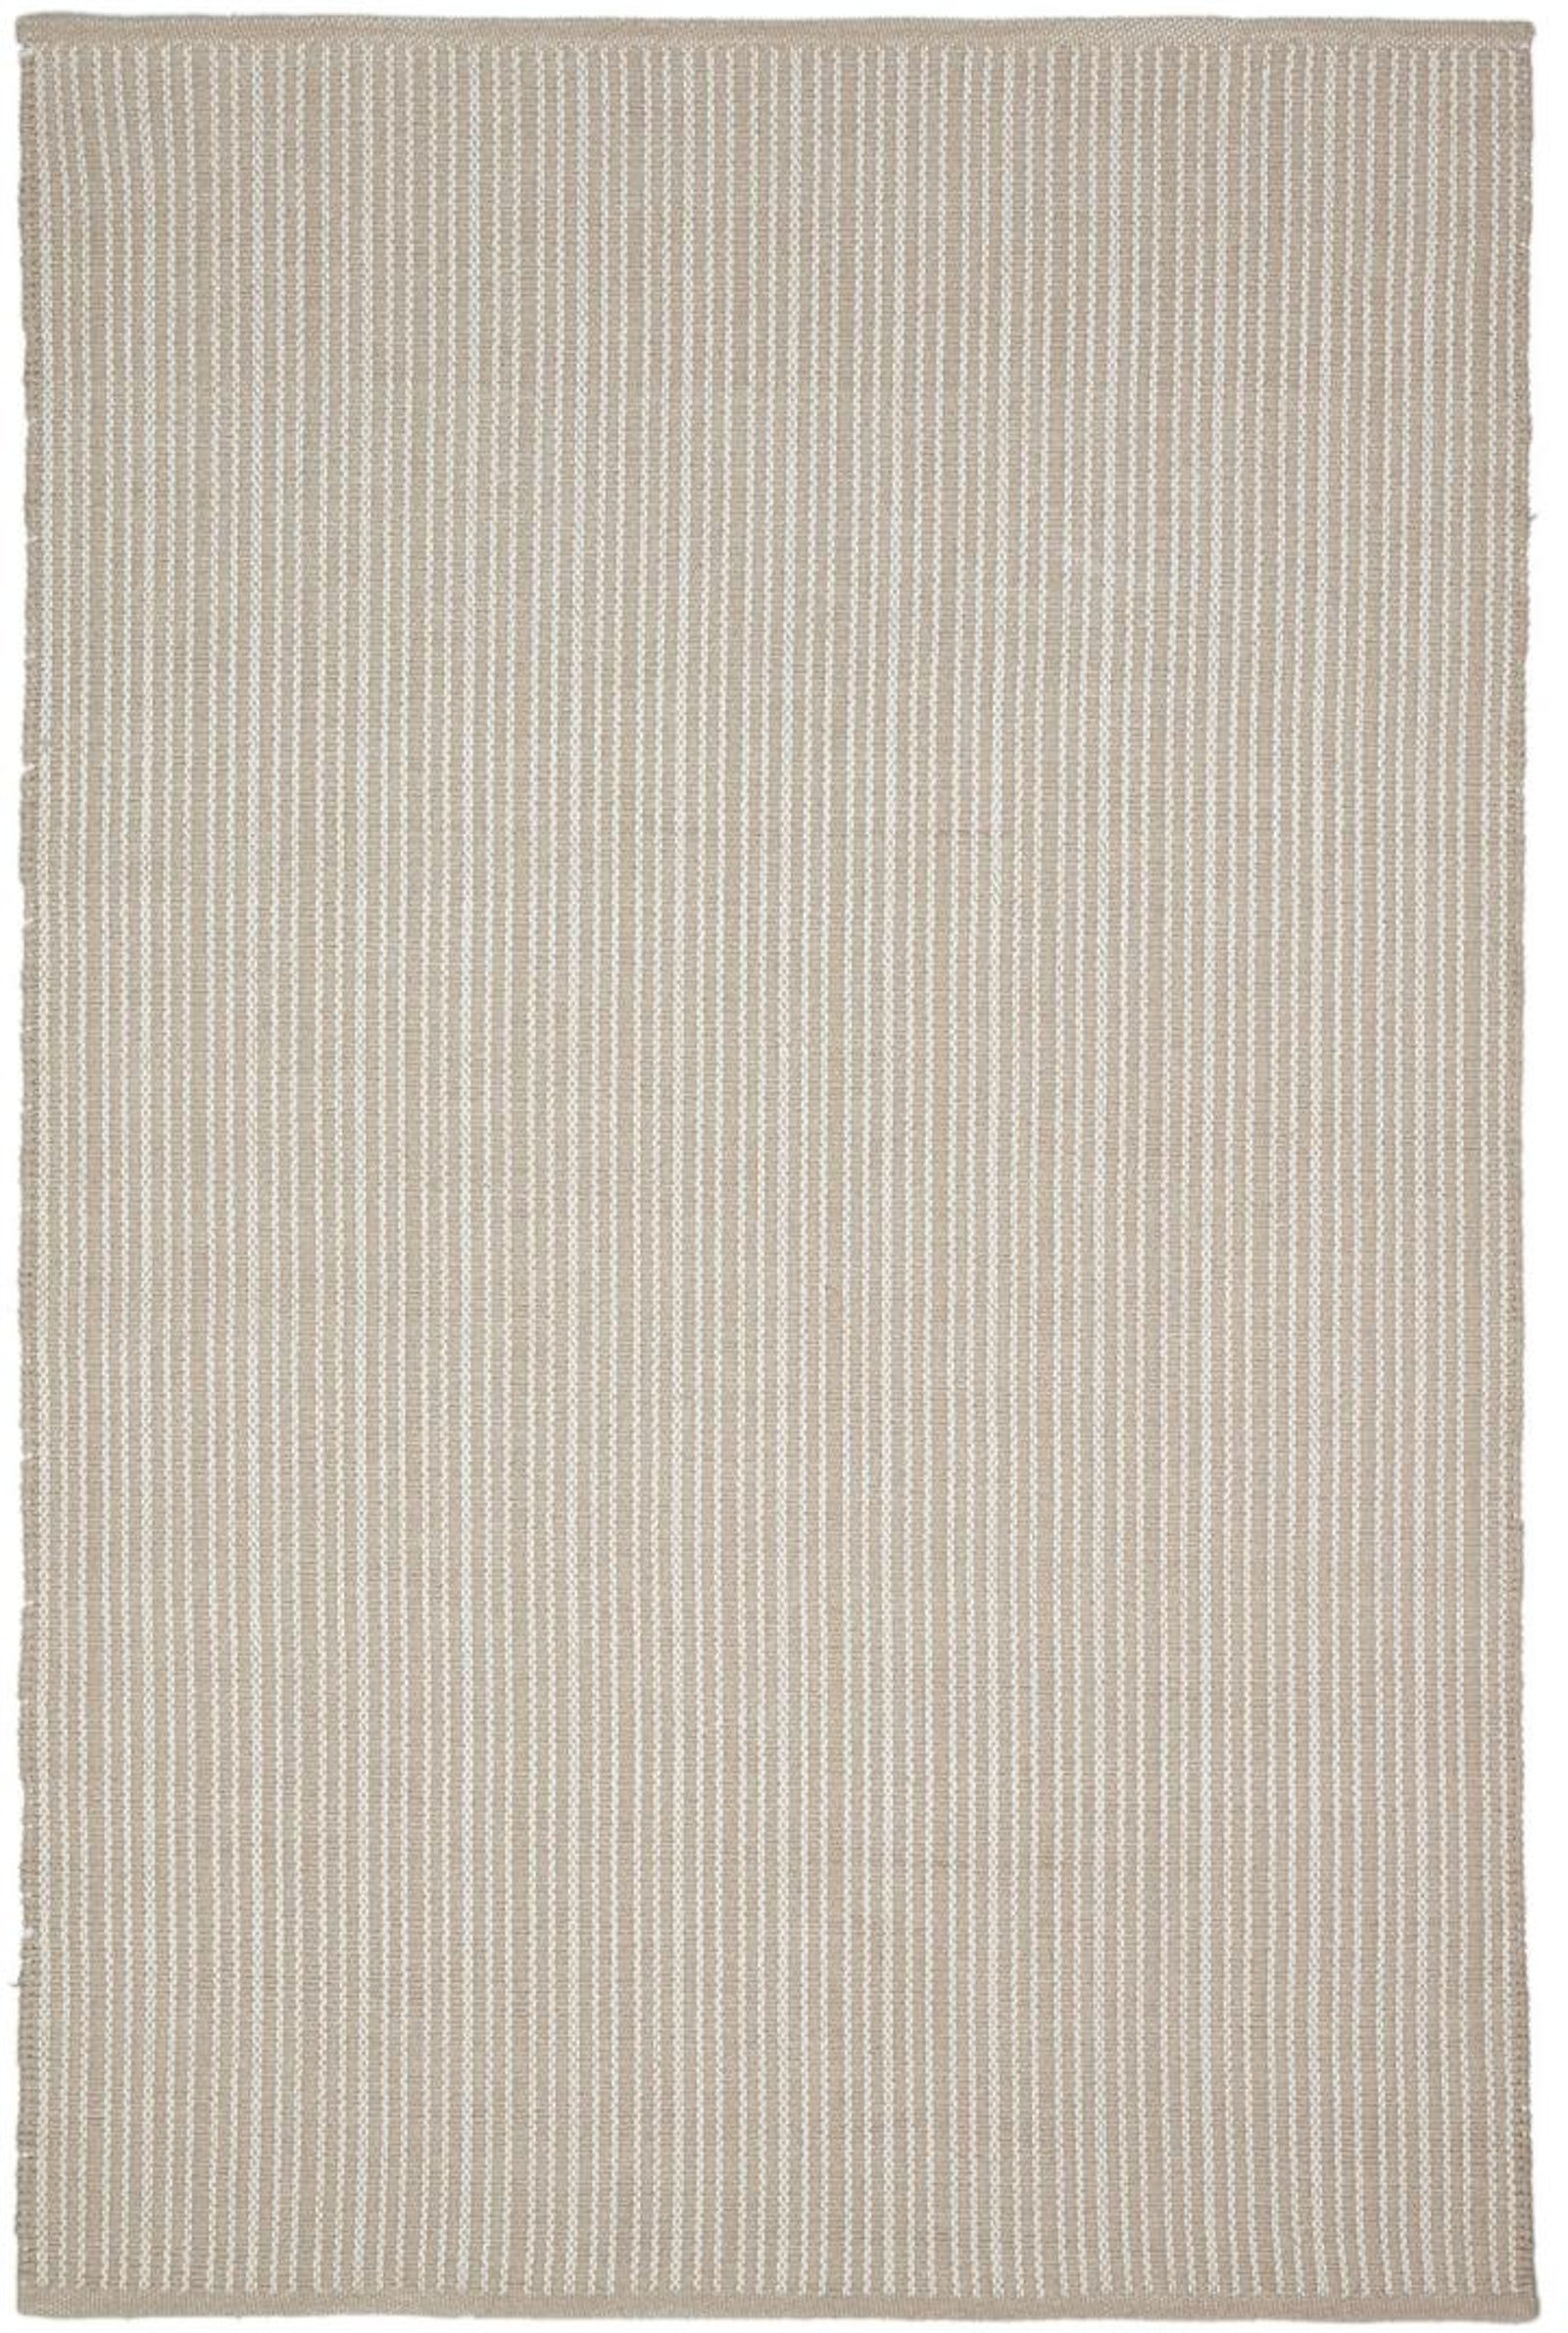 Canyet, Tæppe, moderne, nordisk, stof by Laforma (H: 1 cm. x B: 160 cm. x L: 230 cm., Beige)